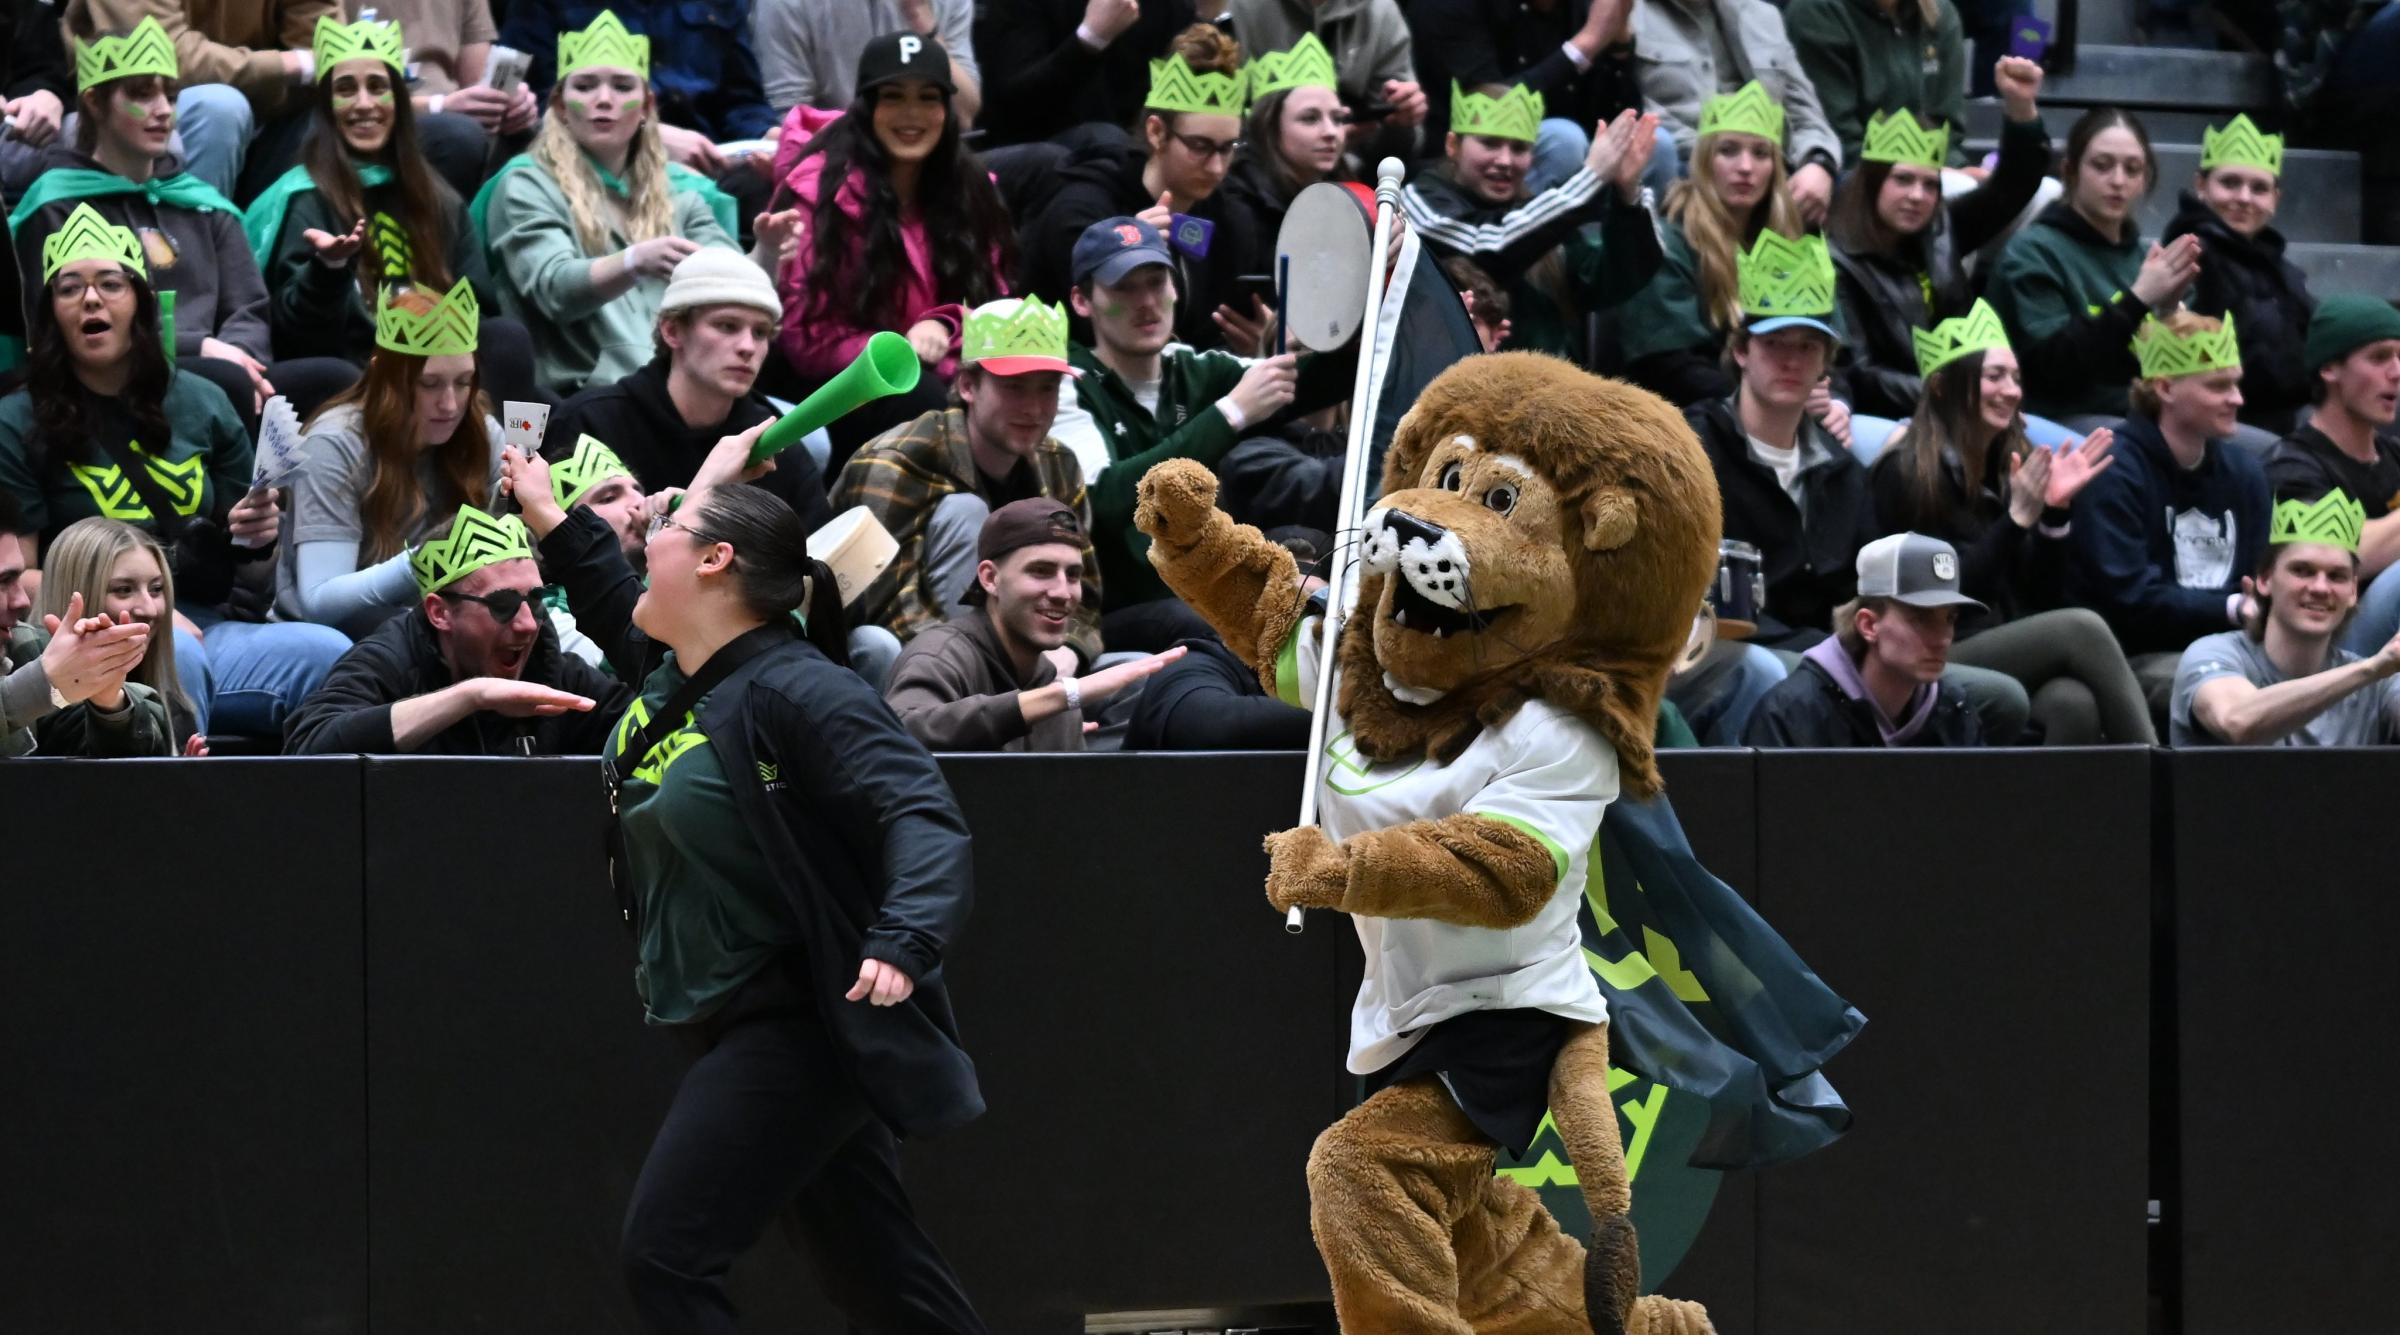 Rufus, RDP's lion mascot, runs in front of a cheering crowd waving an RDP flag